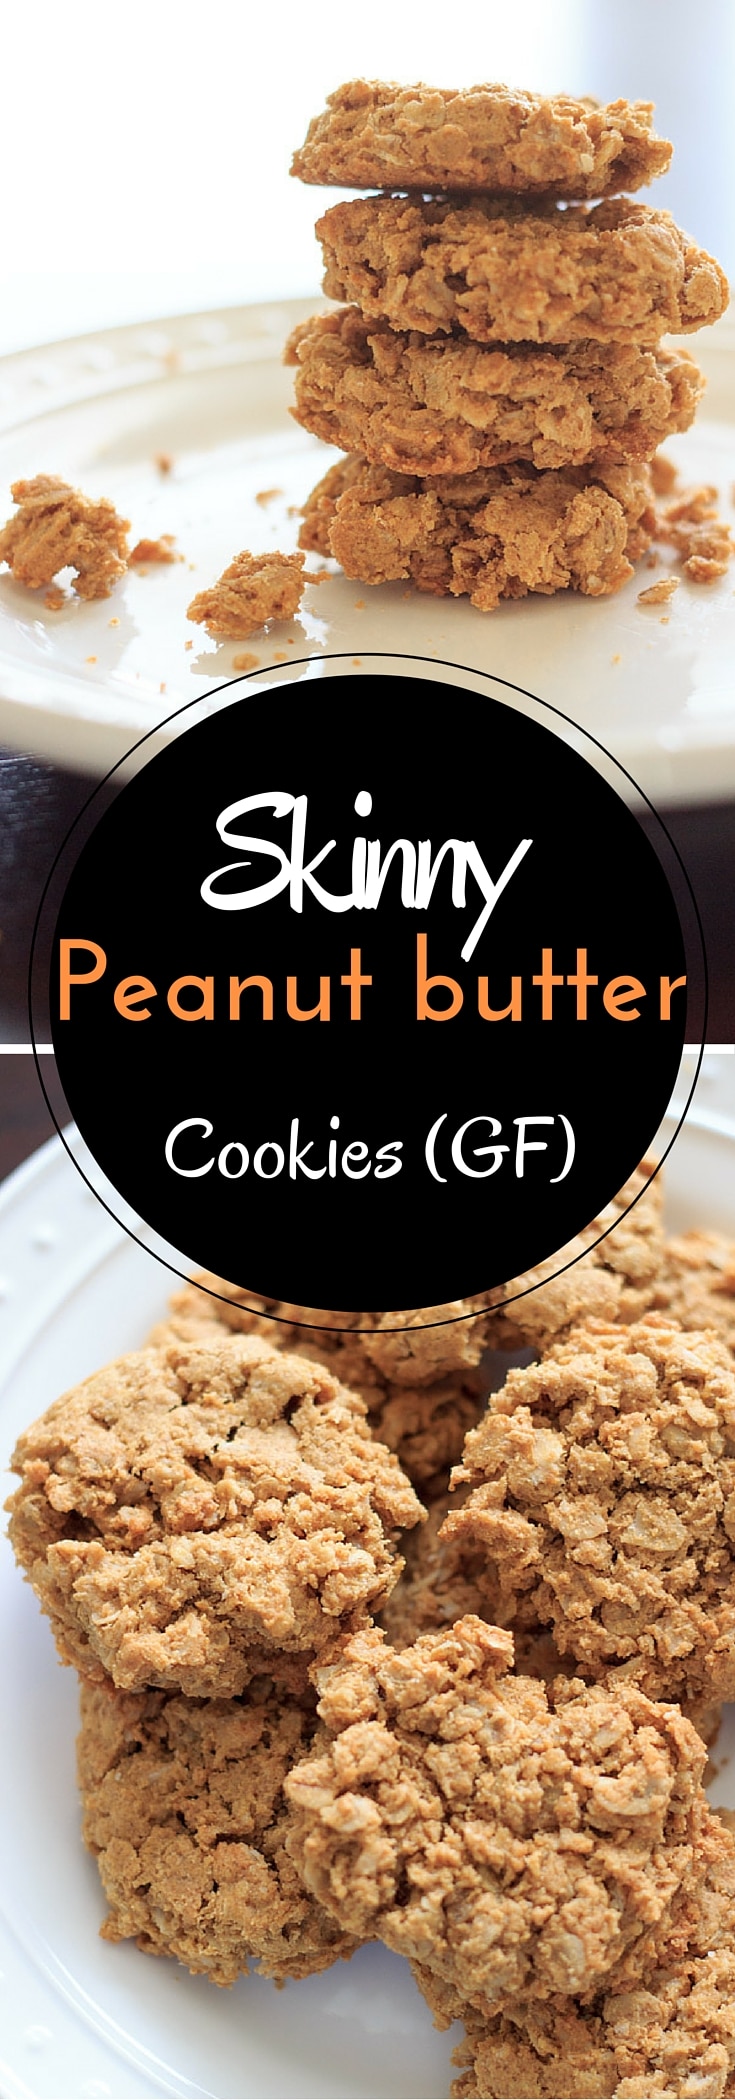 Skinny peanut butter cookies pin